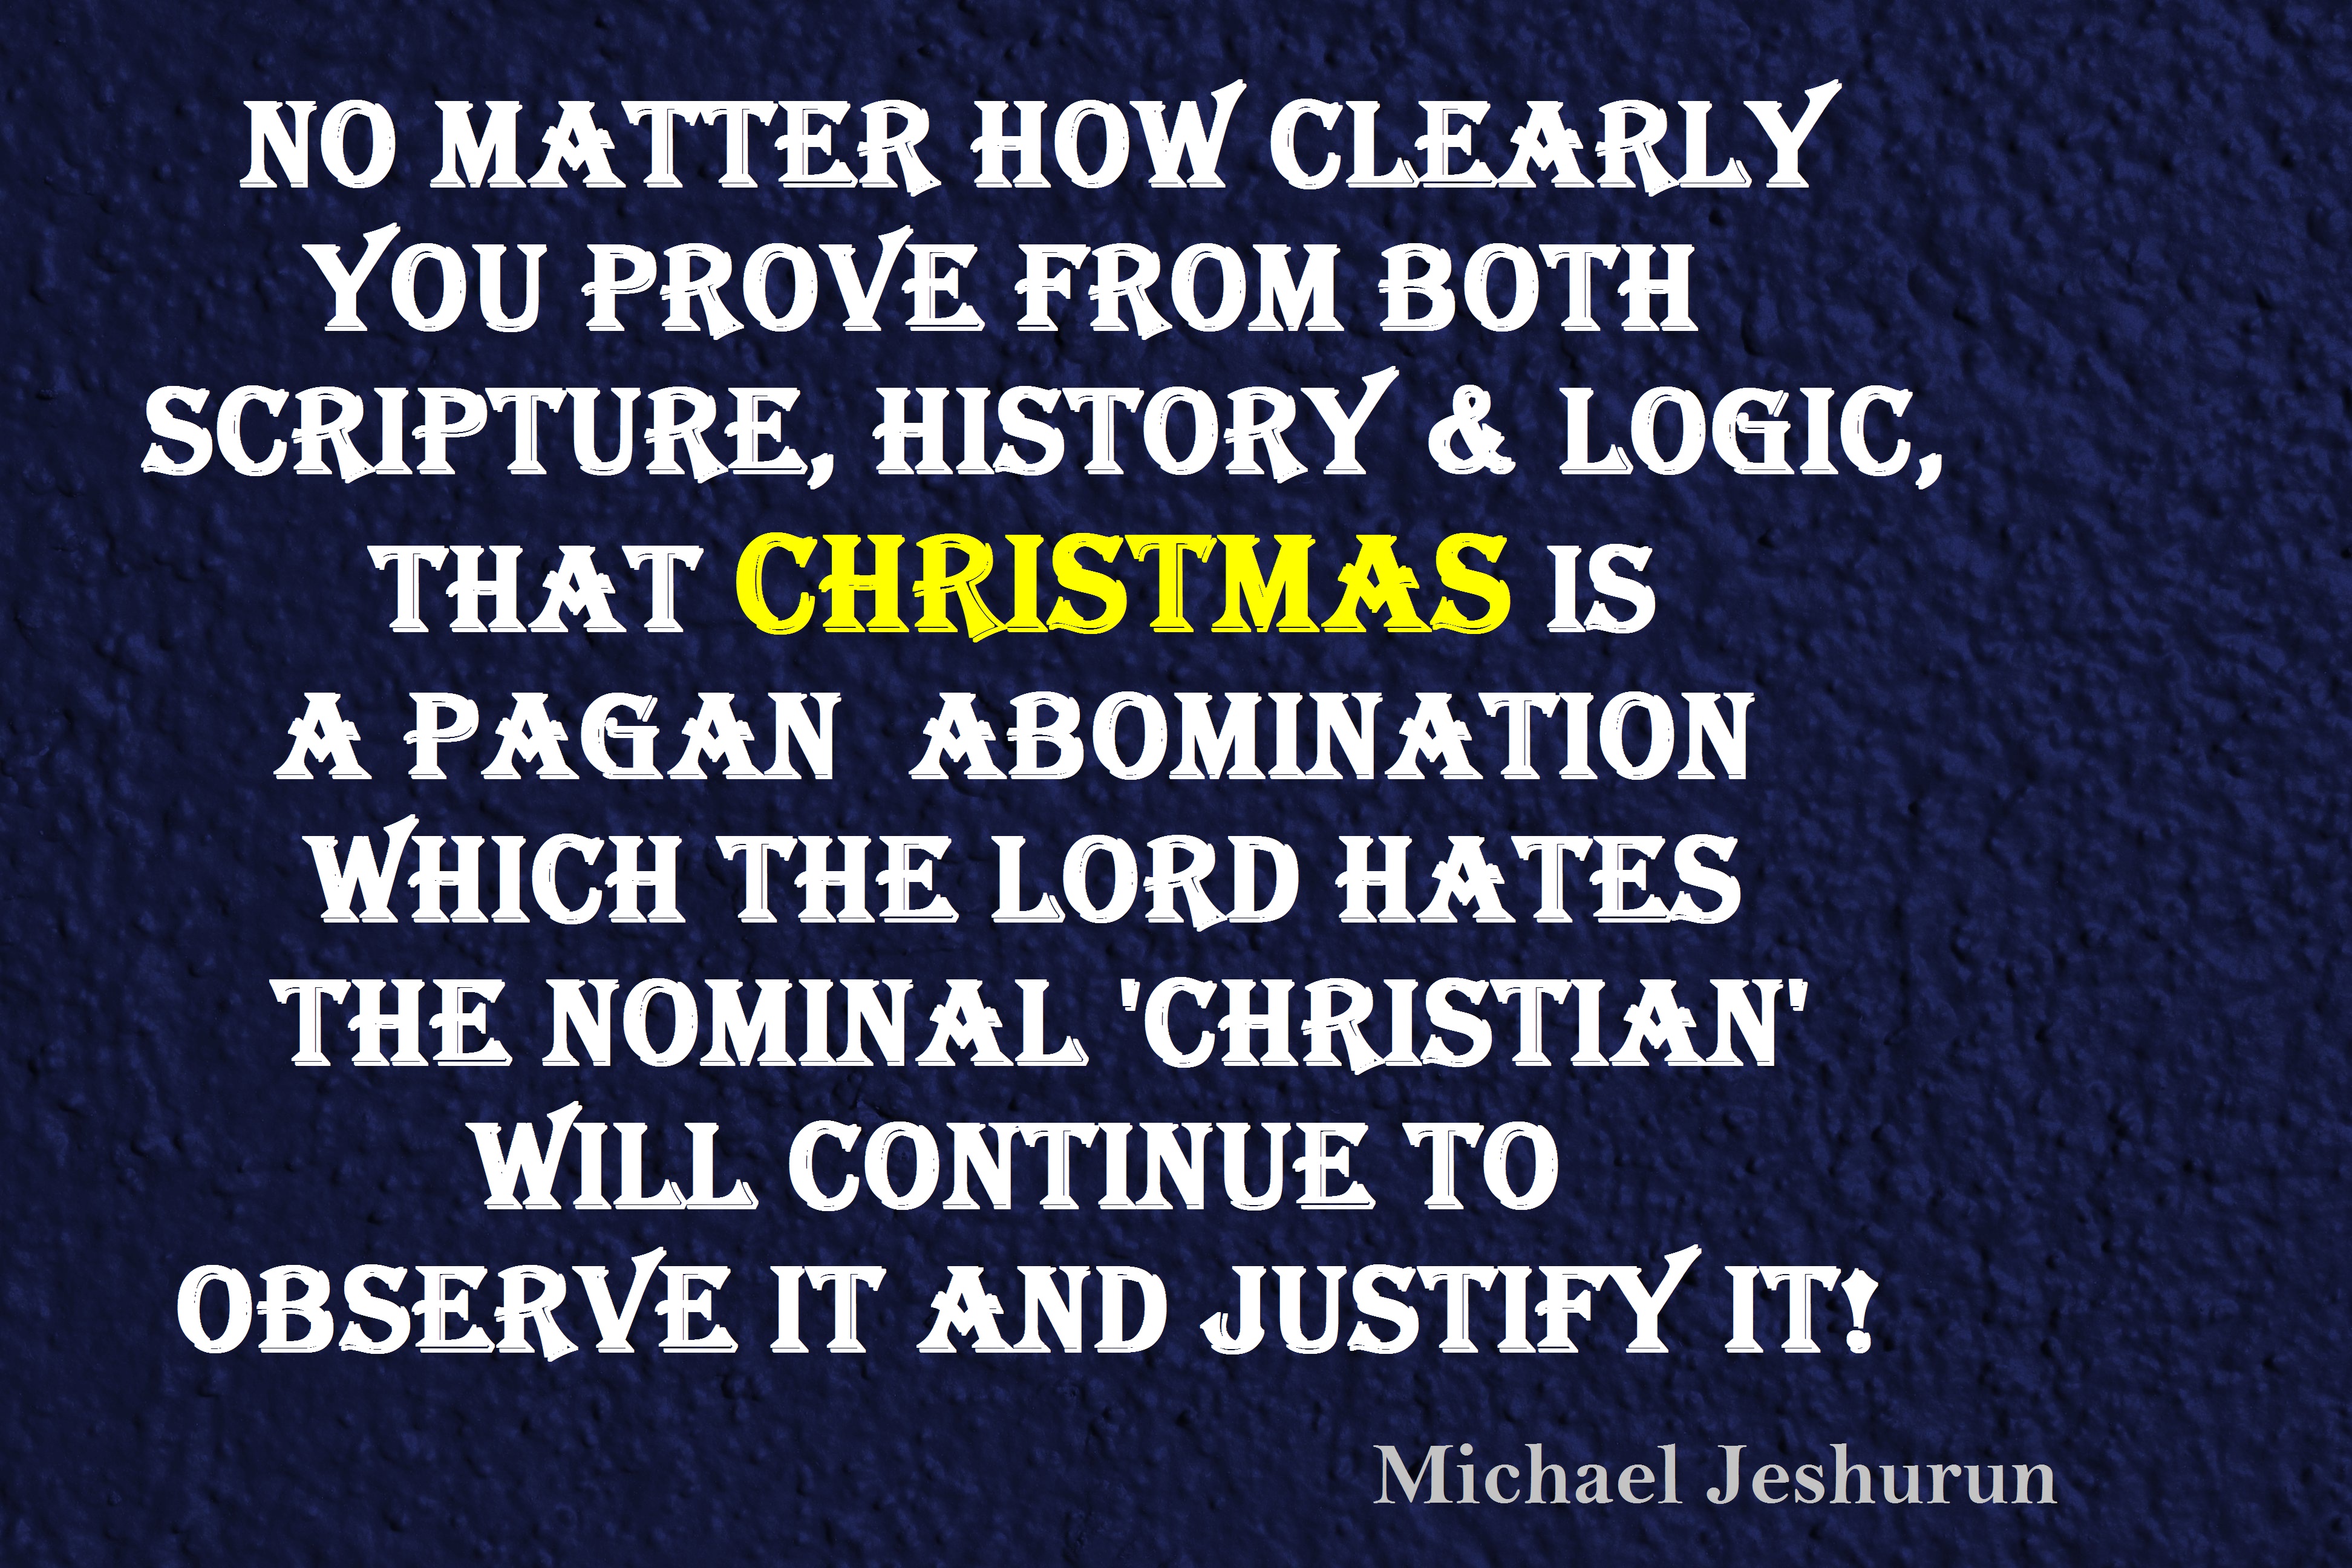 My Christianity and Christmas!